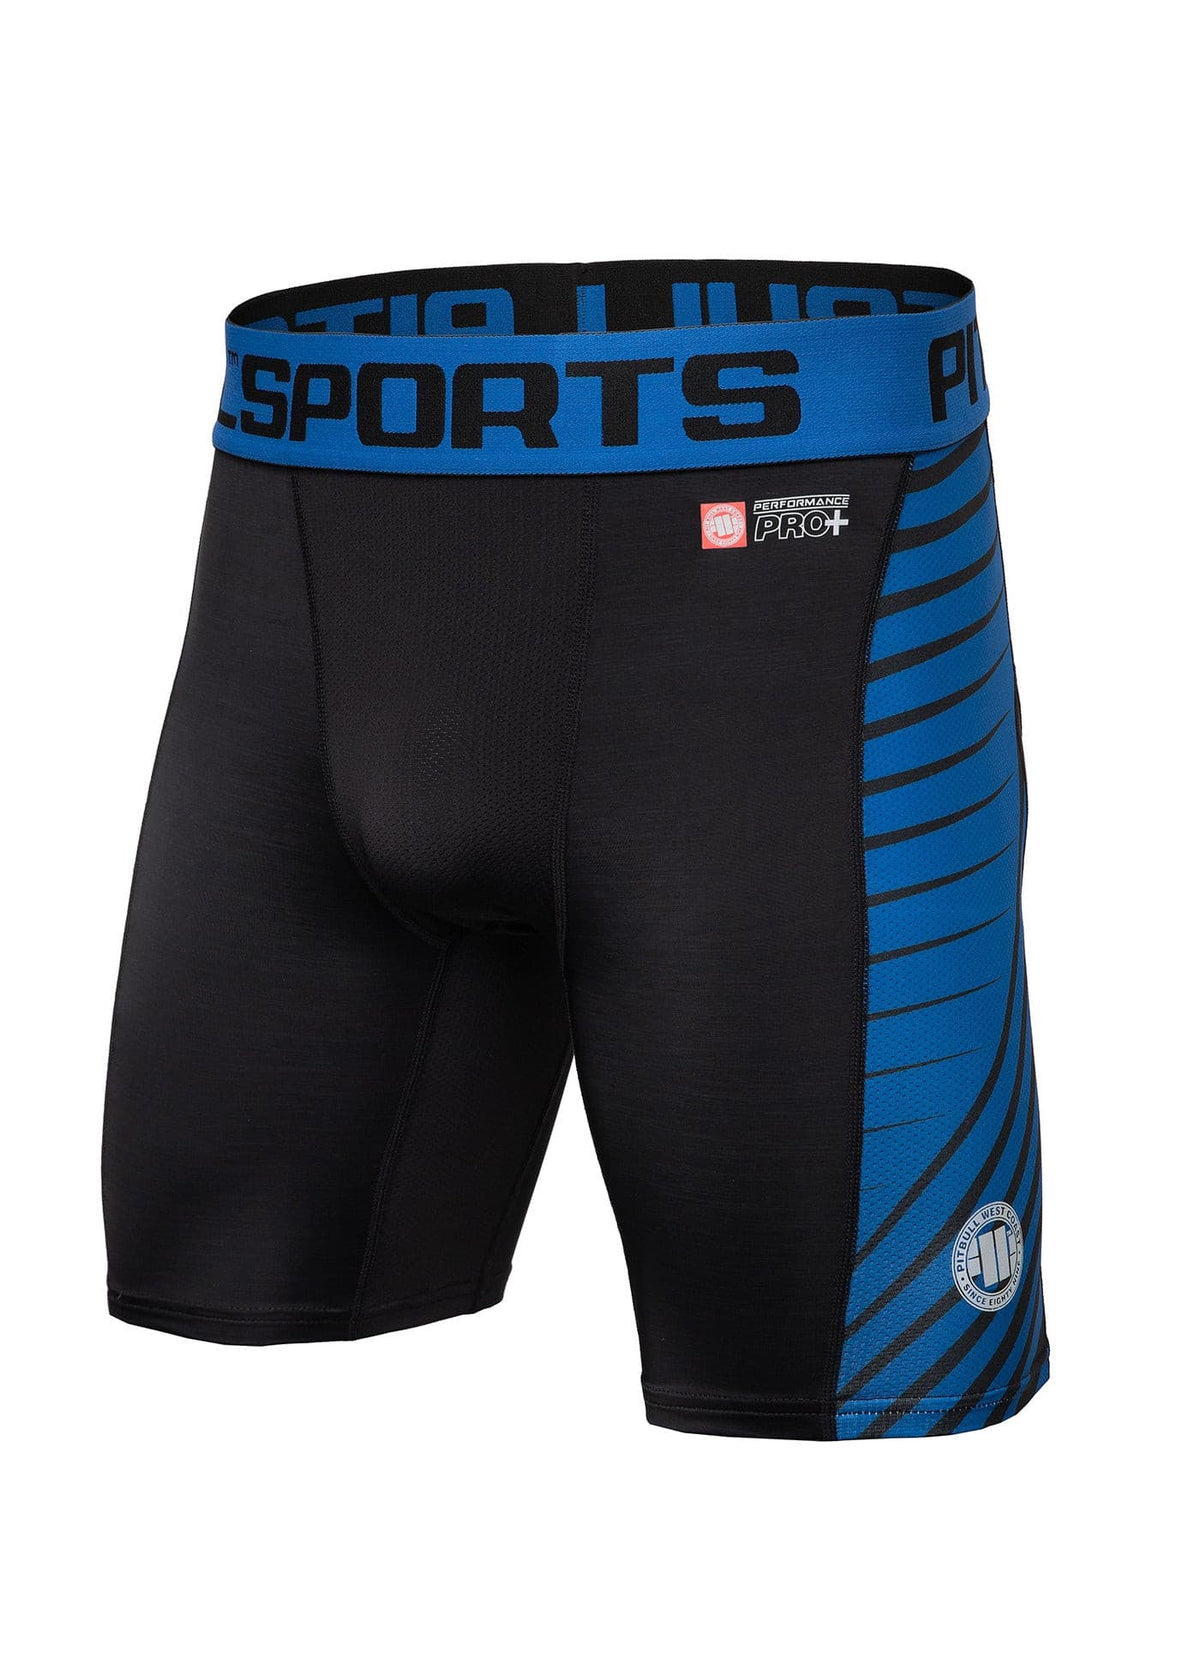 Compression shorts PRO PLUS MLG Blue - Pitbull West Coast U.S.A. 